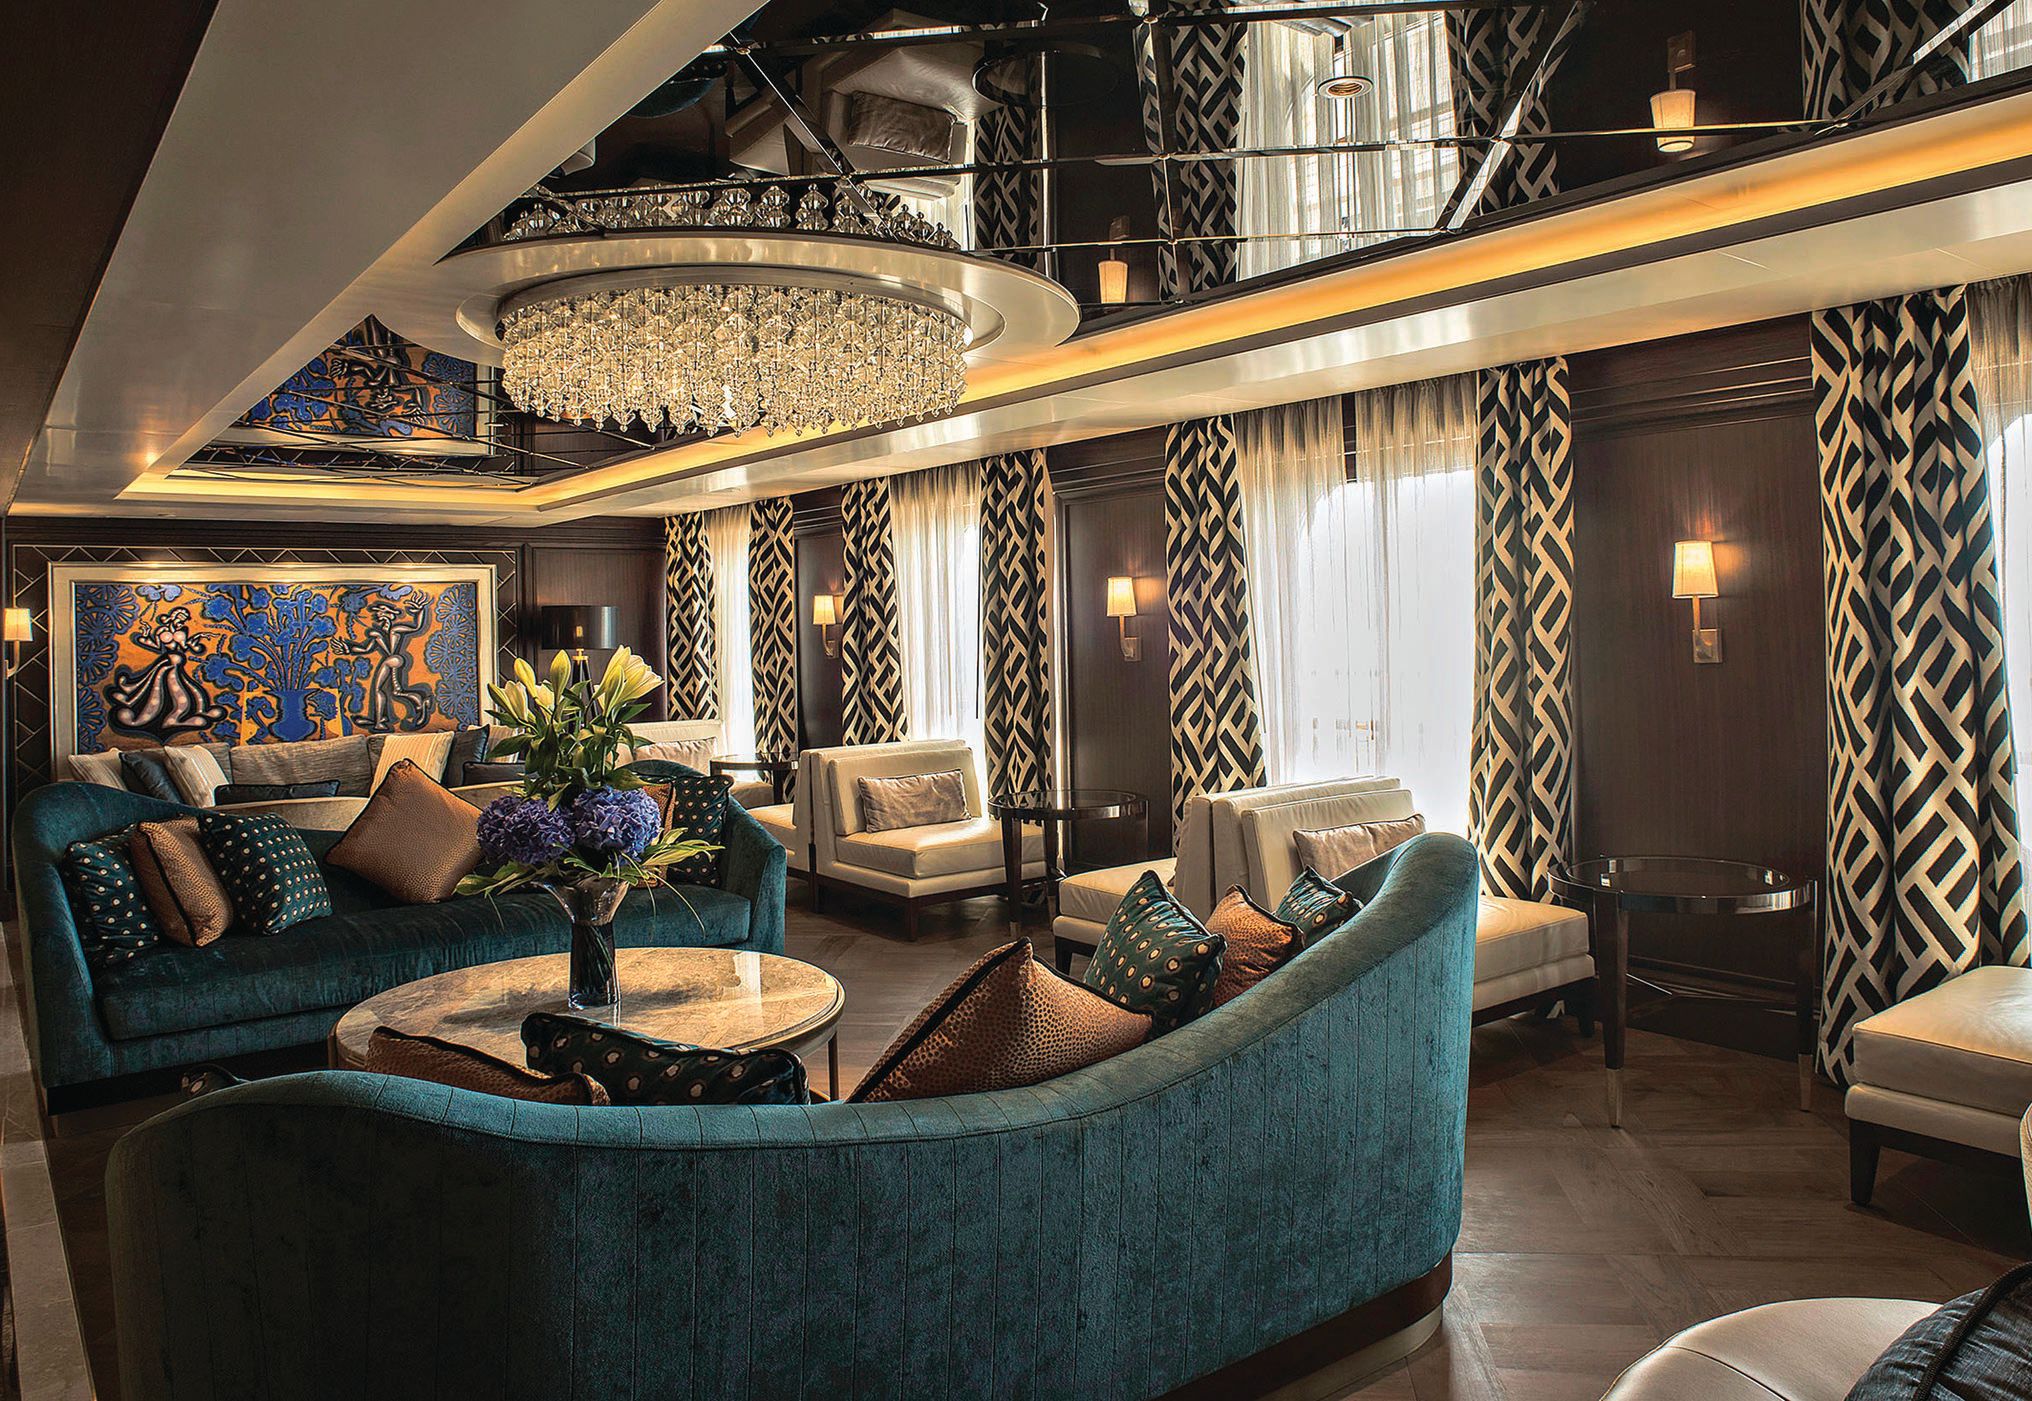 A Look Inside Regent Seven Seas Most Luxurious Cruise Ship